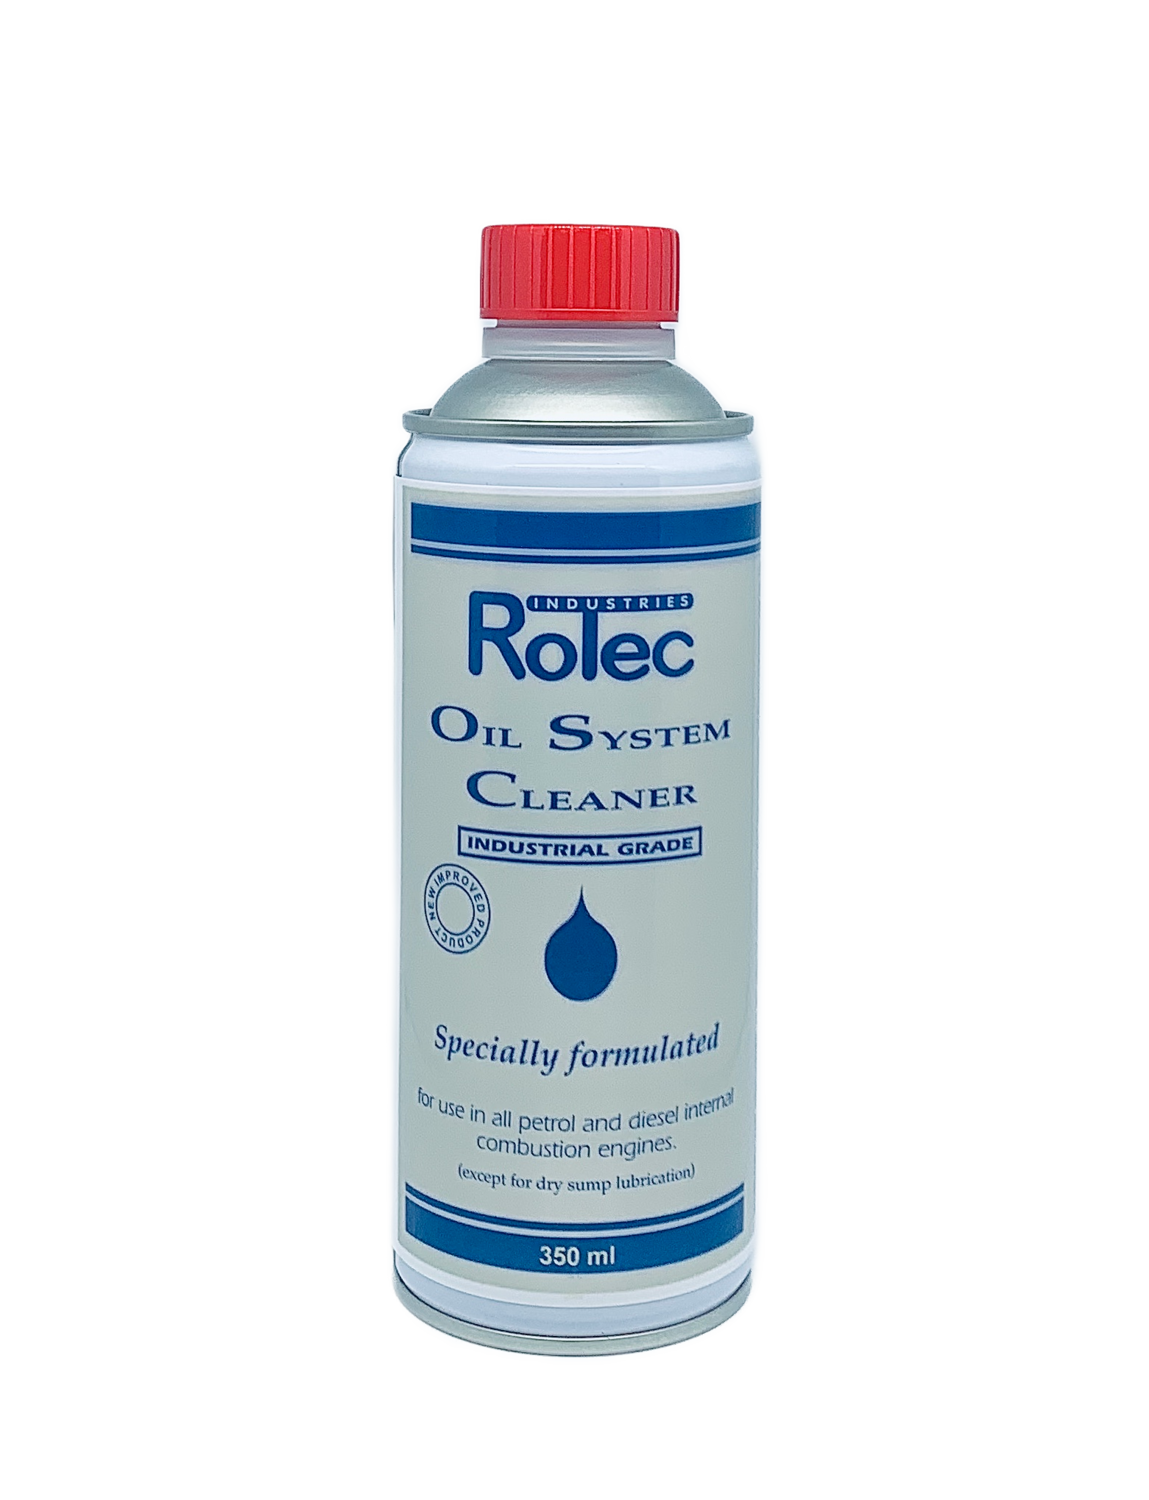 ROTEC Oil System Cleaner - Petrol or Diesel Internal Oil Flush Cleaner (RO 711)